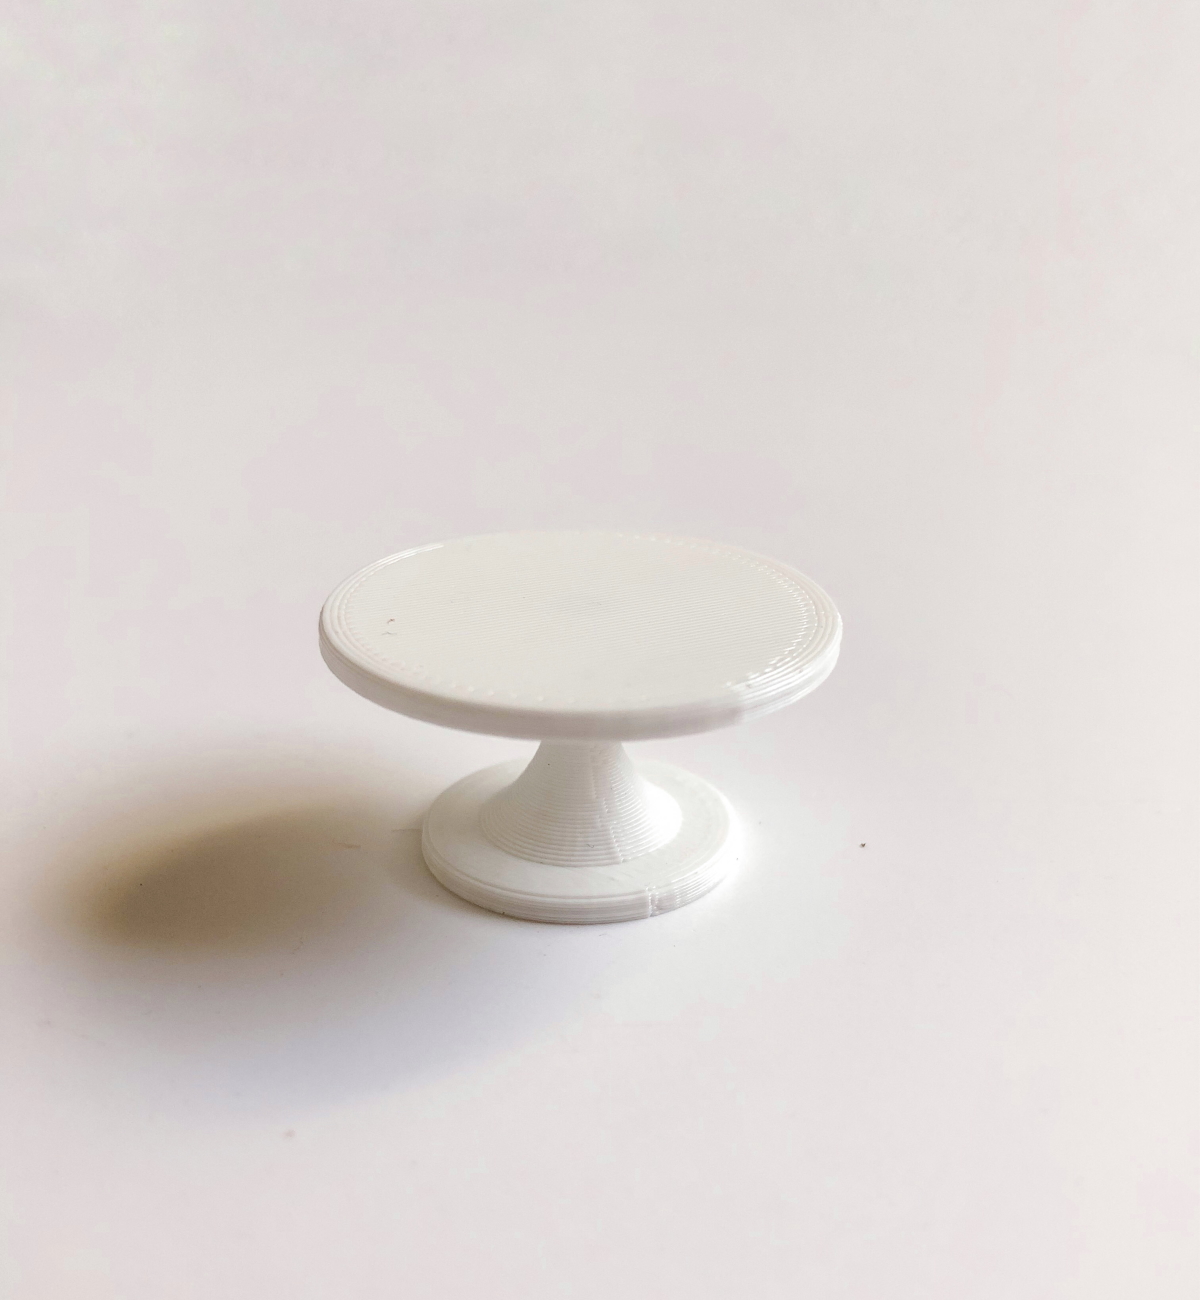 Dollhouse 3D print White Cake Stand